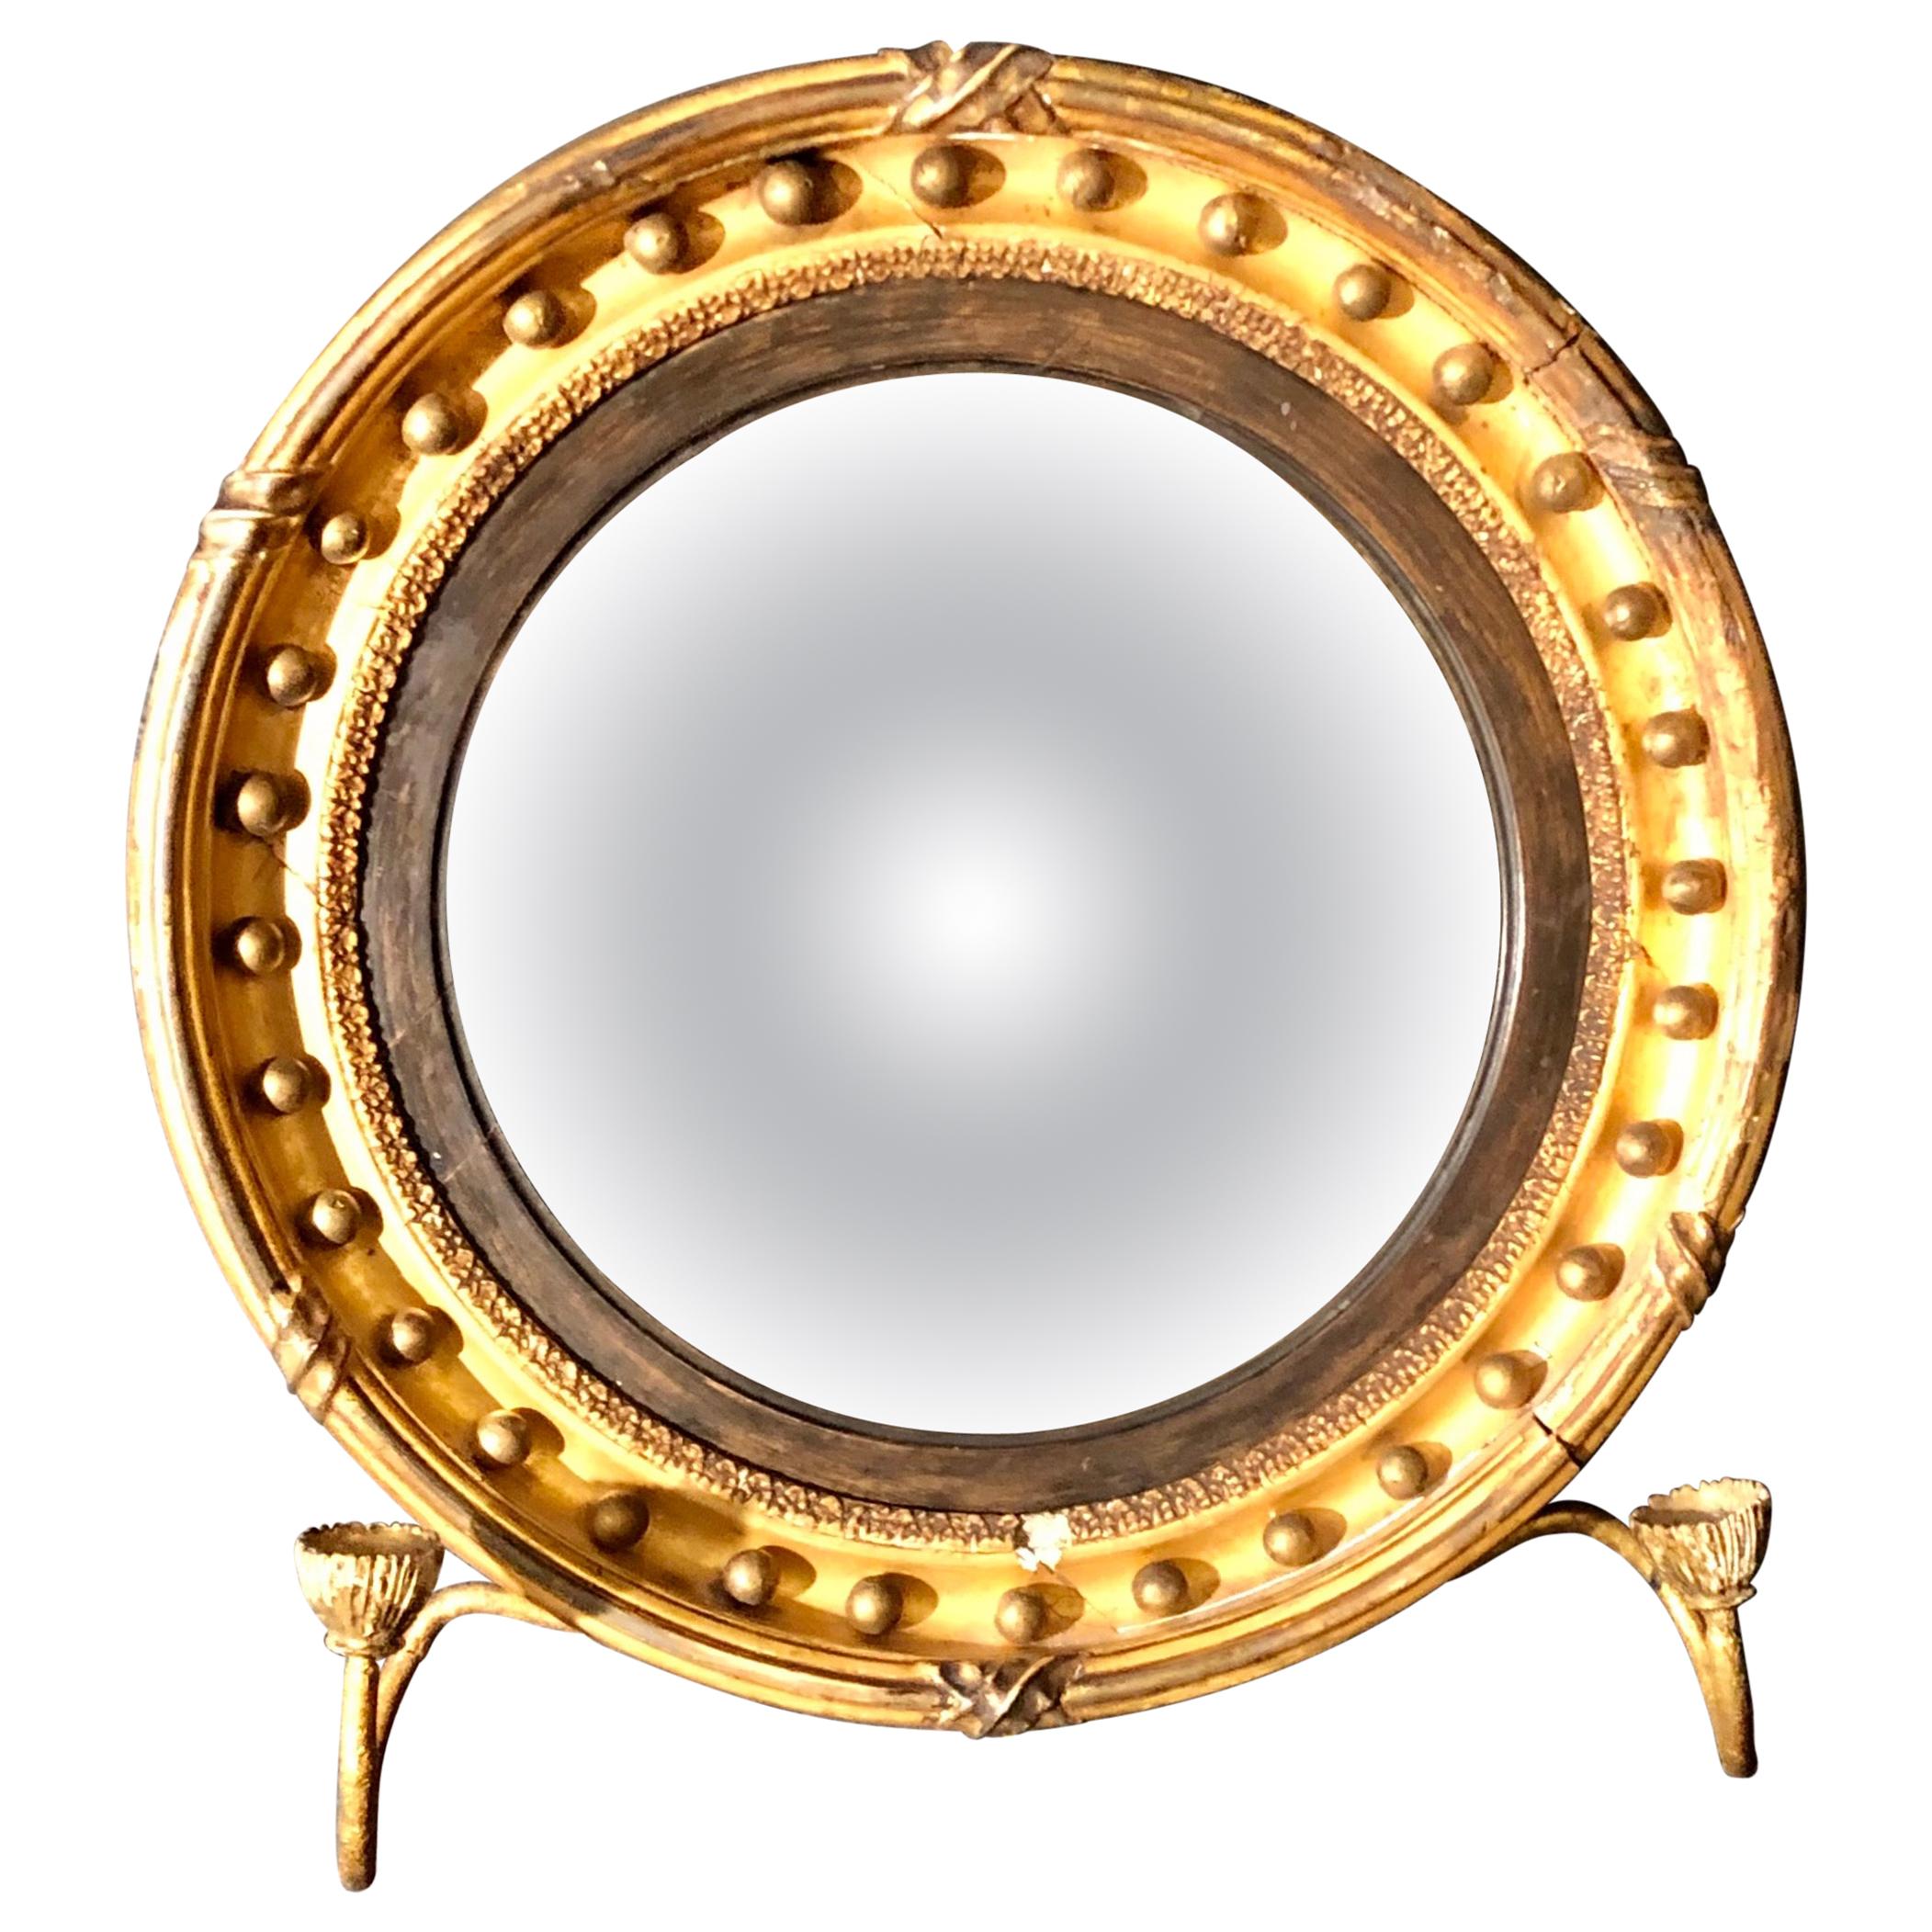 19th Century Federal Giltwood Bullseye Convex Mirror Wall Sconce